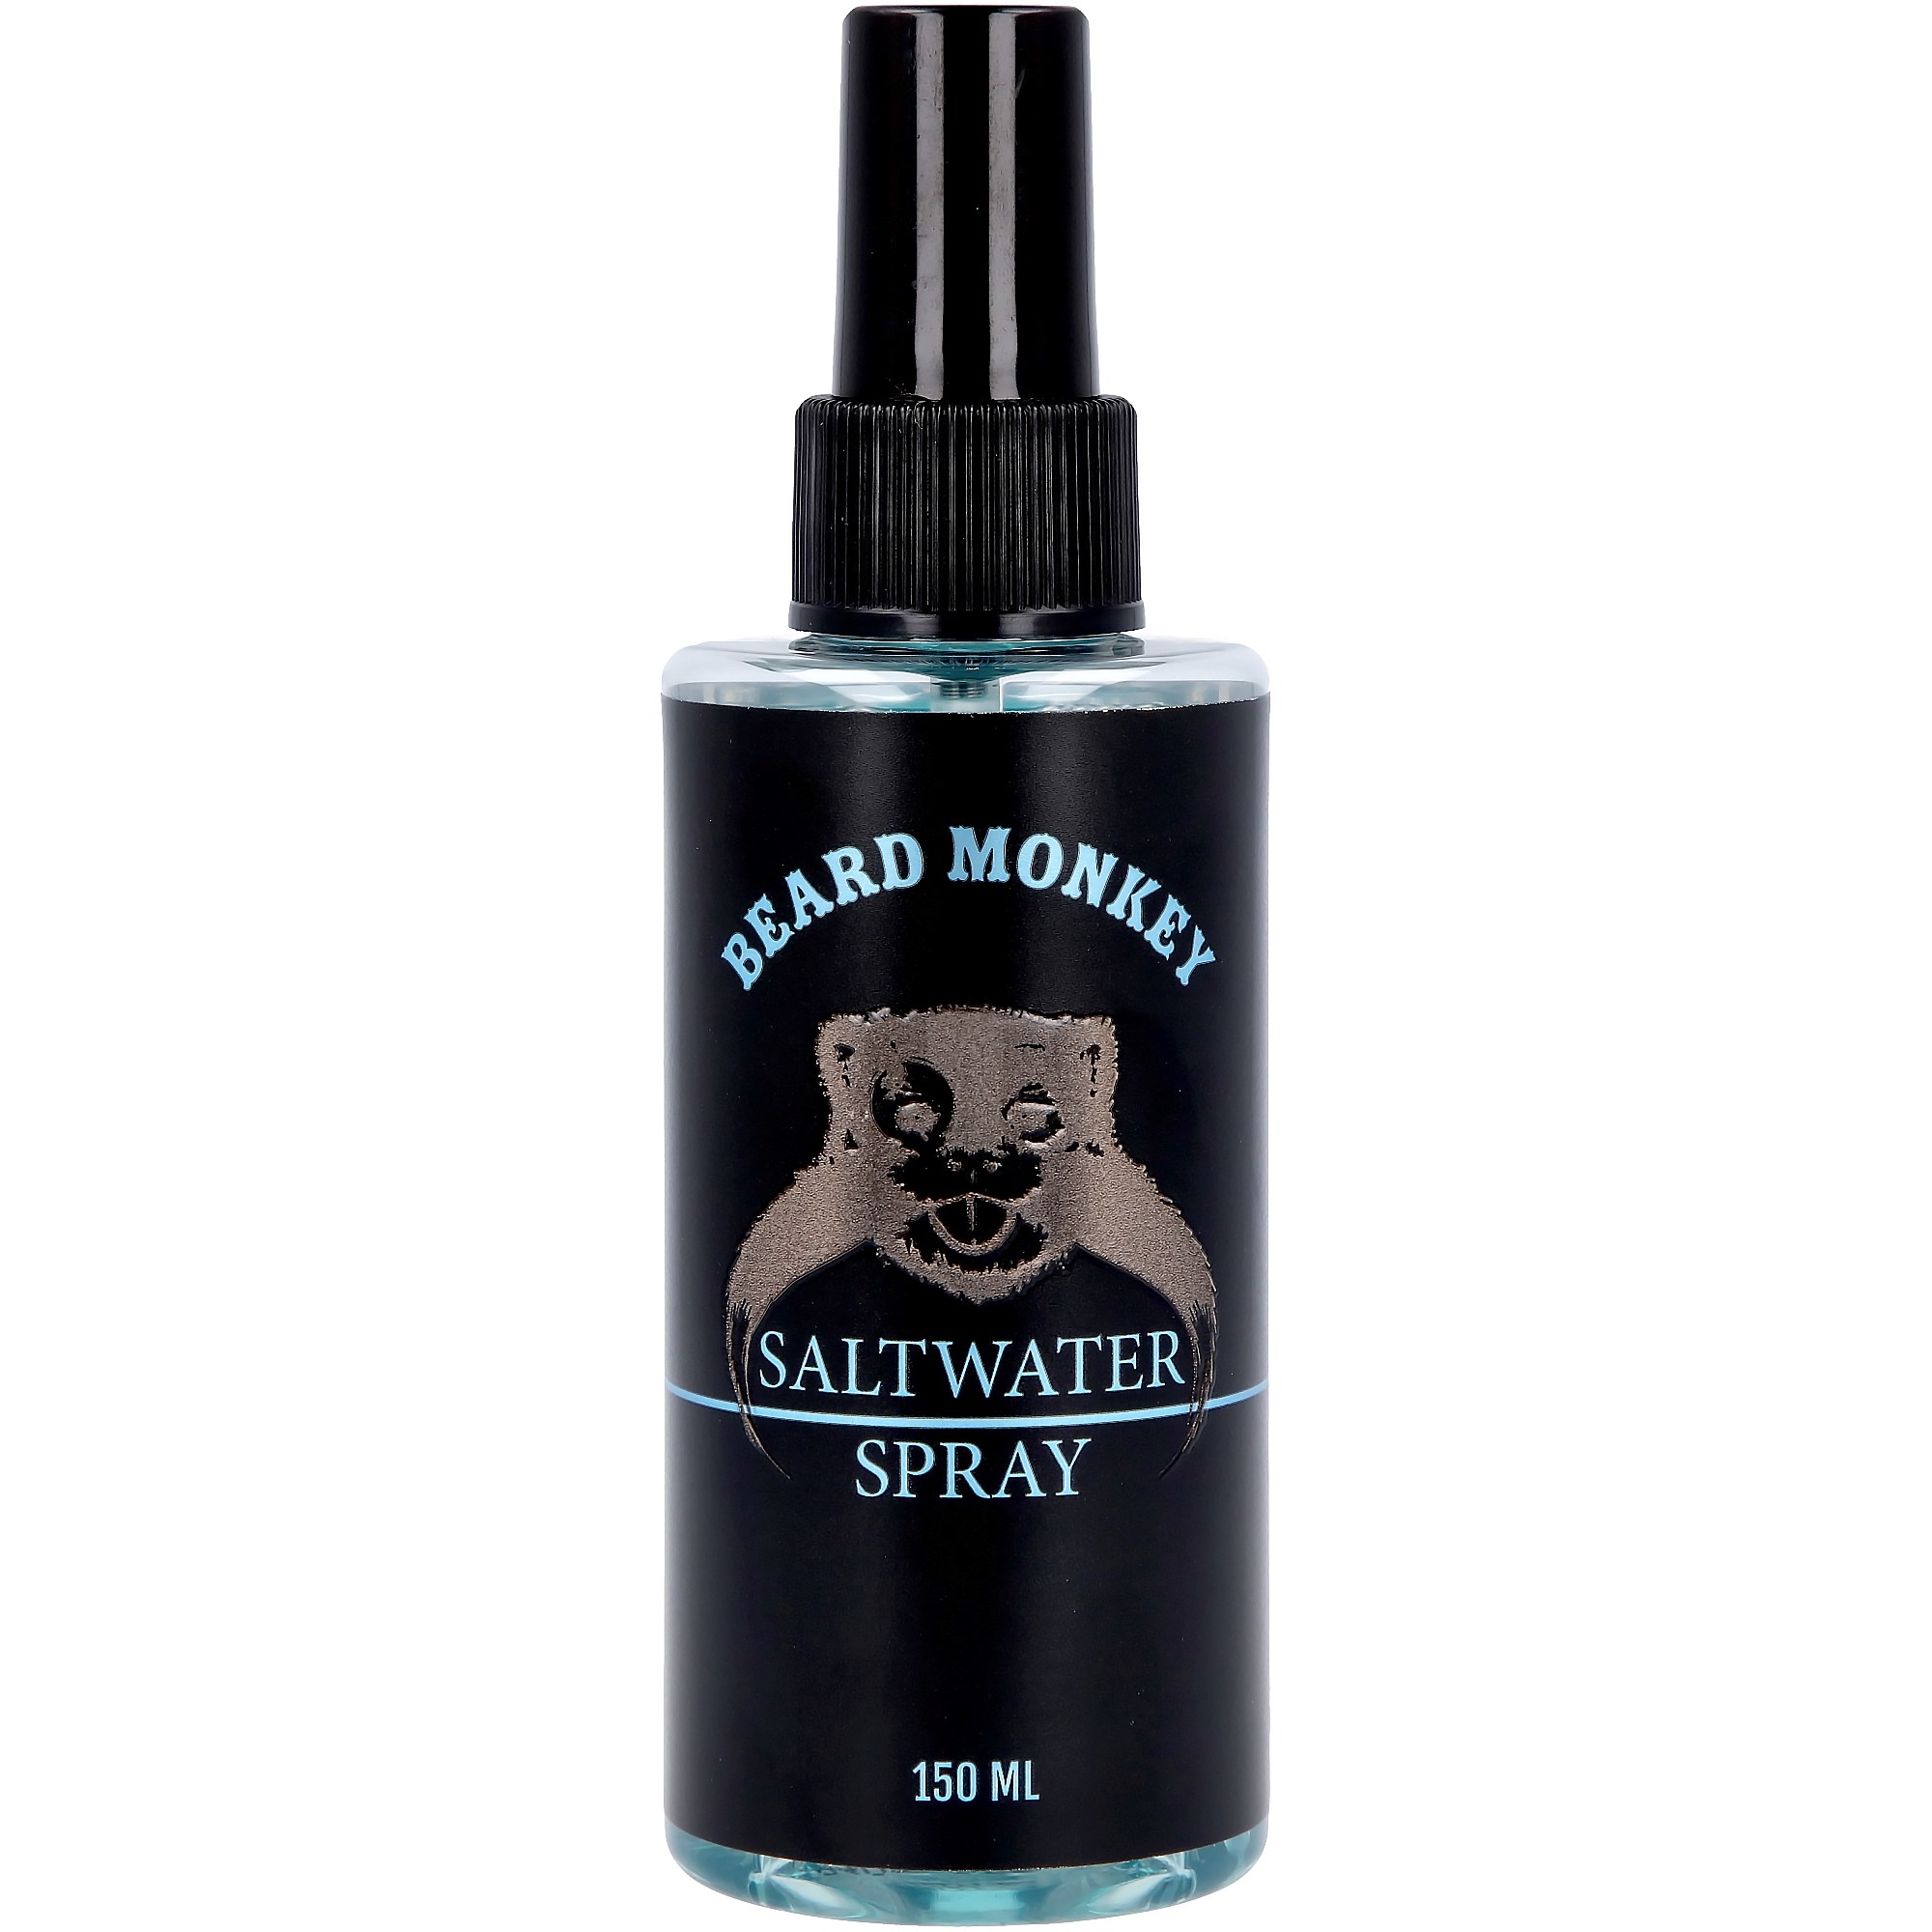 Läs mer om Beard Monkey Saltwater spray 150 ml